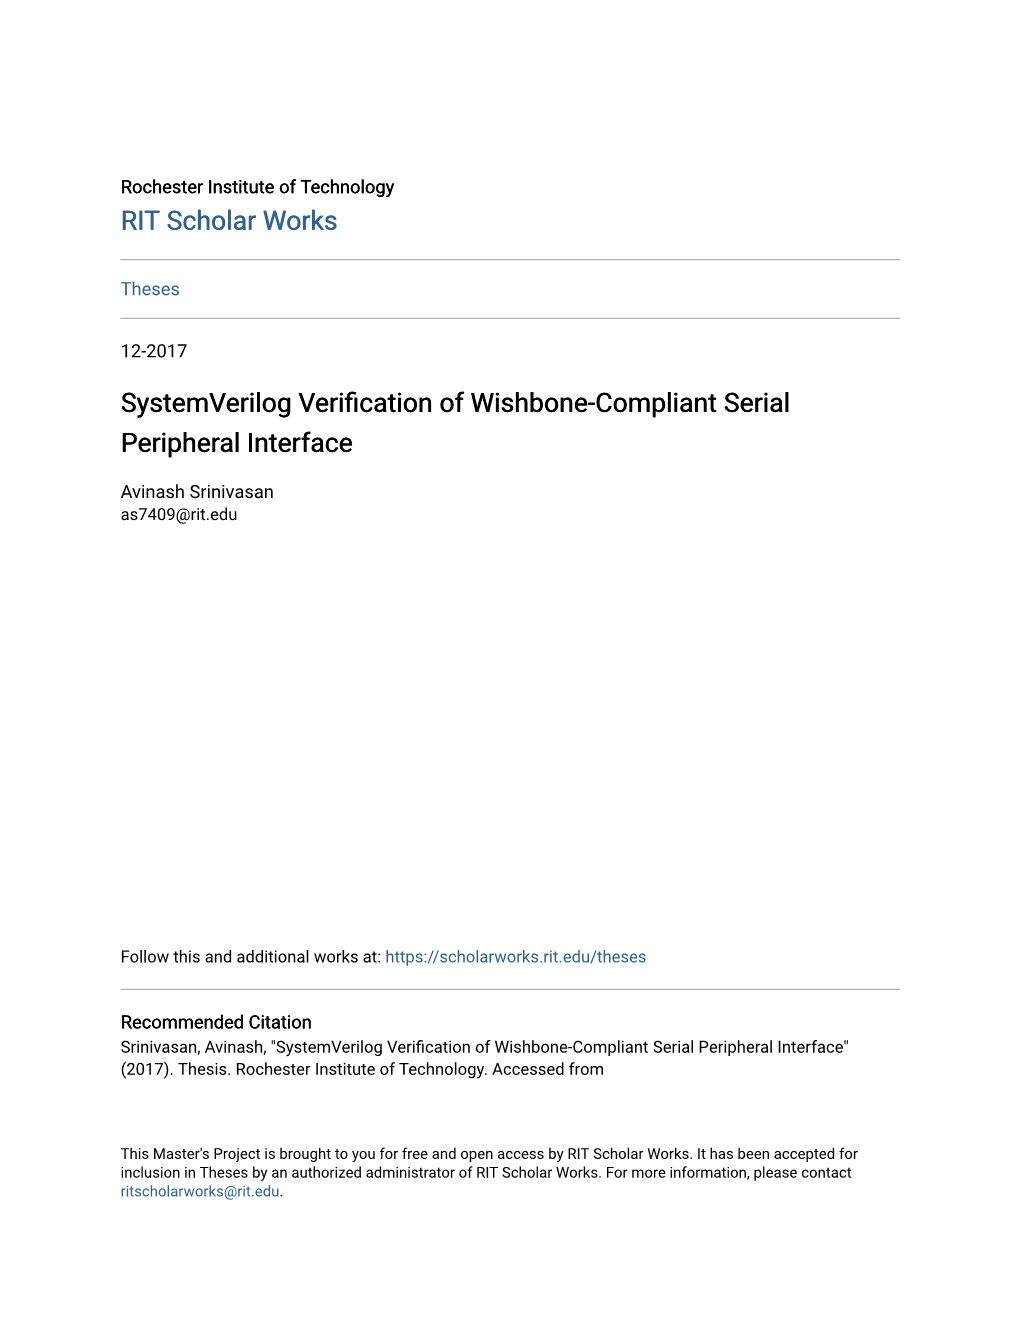 Systemverilog Verification of Wishbone-Compliant Serial Peripheral Interface